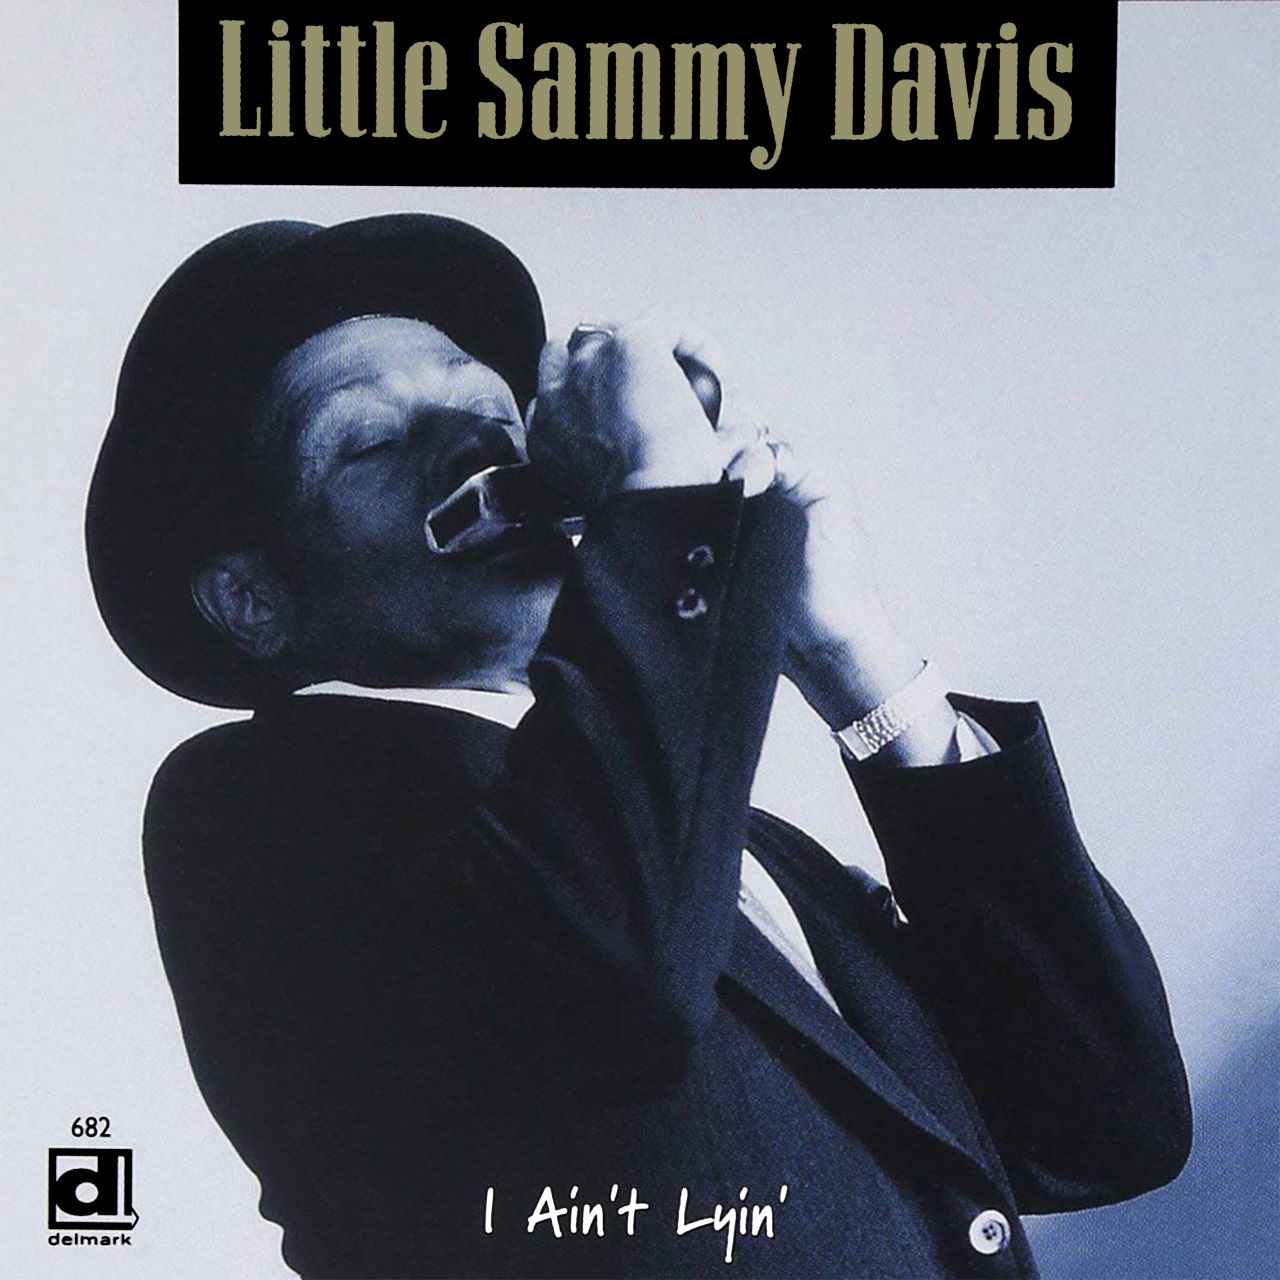 Little Sammy Davis - I Ain't Lyin' cover album